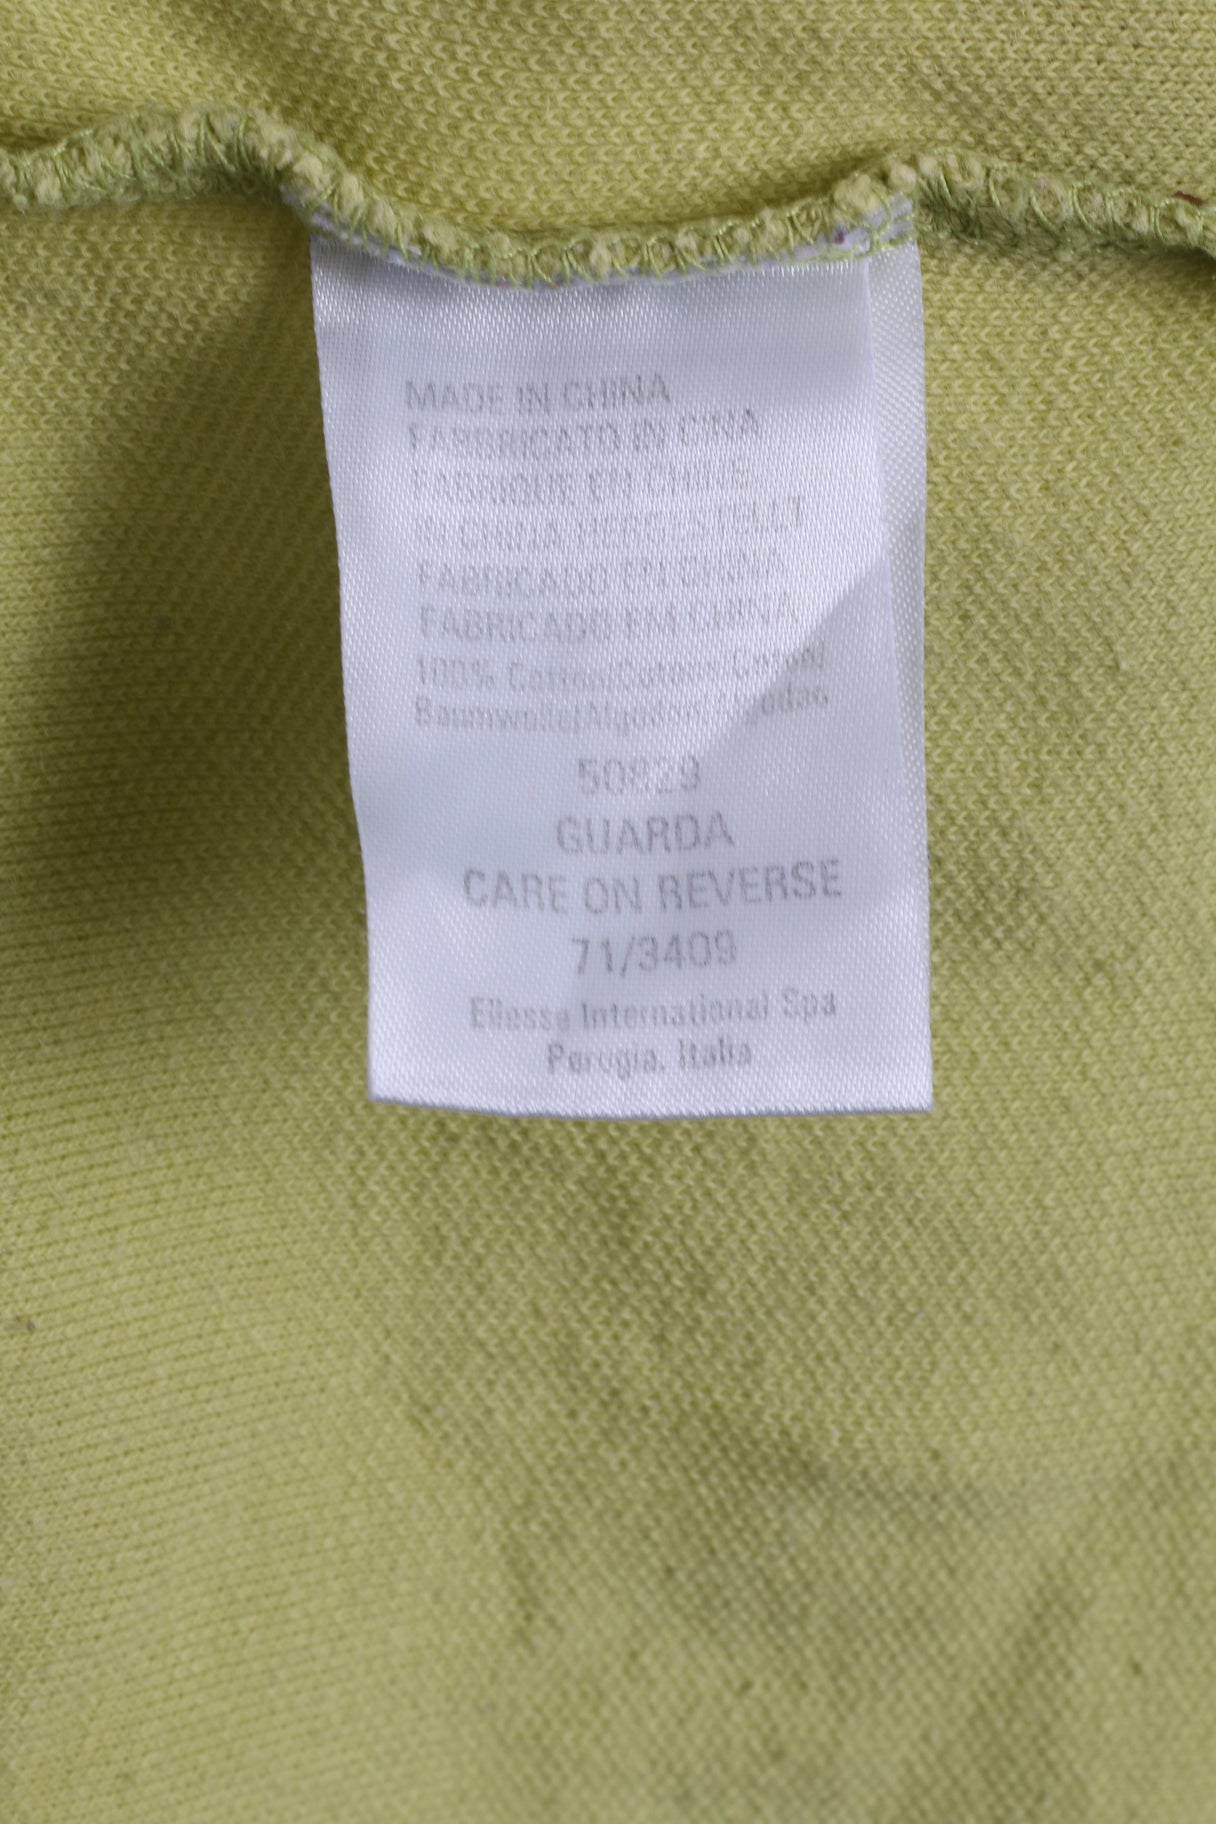 Ellesse Mens L Polo Shirt Cotton Olive Detailed Buttons